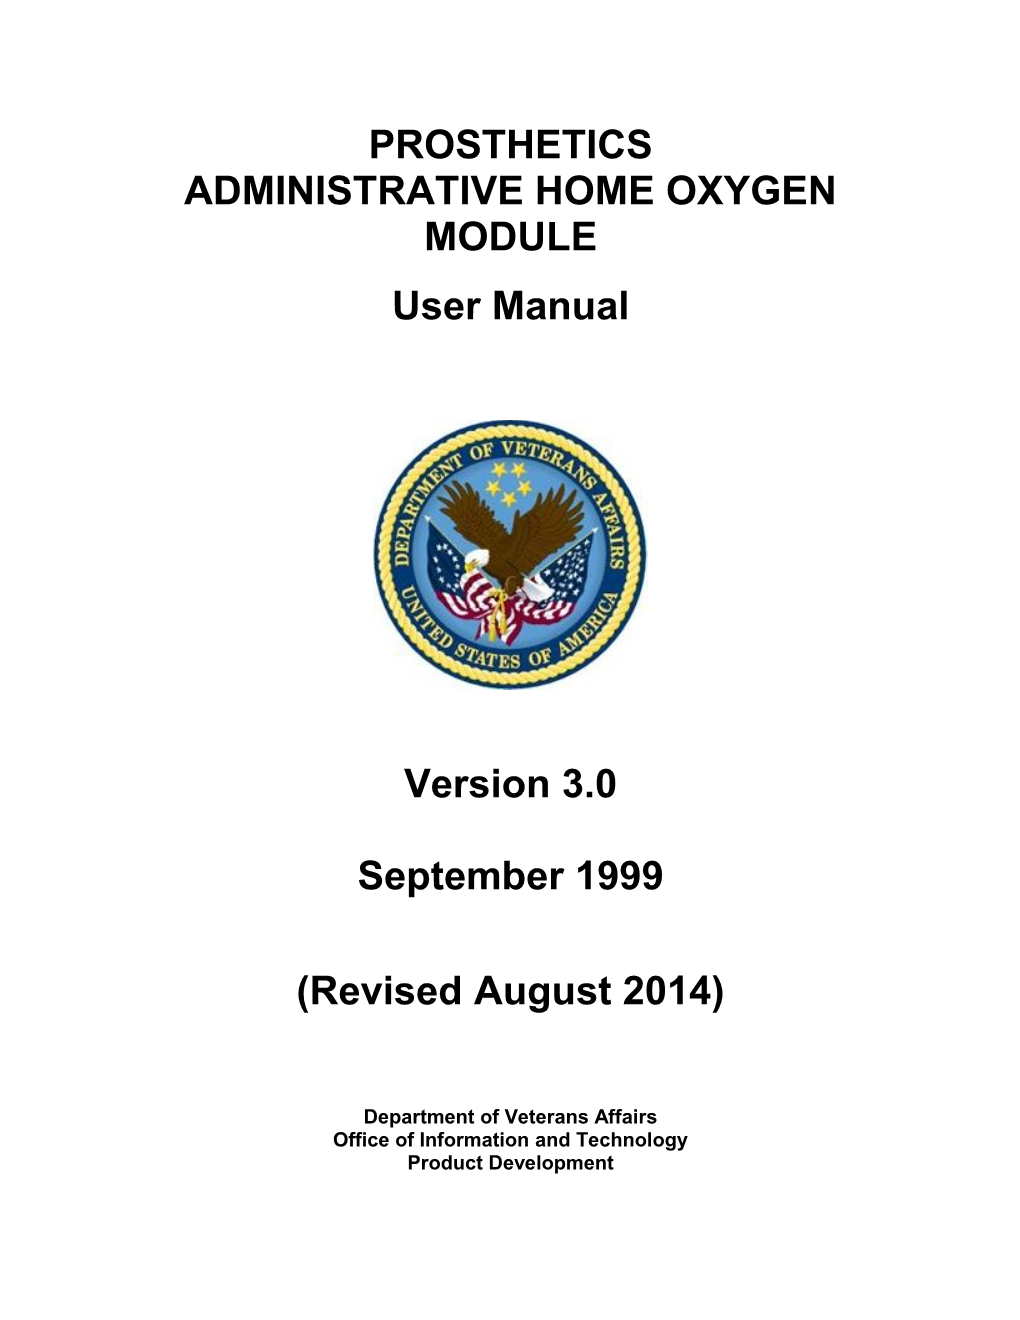 Prosthetics Administrative Home Oxygen Module User Manual